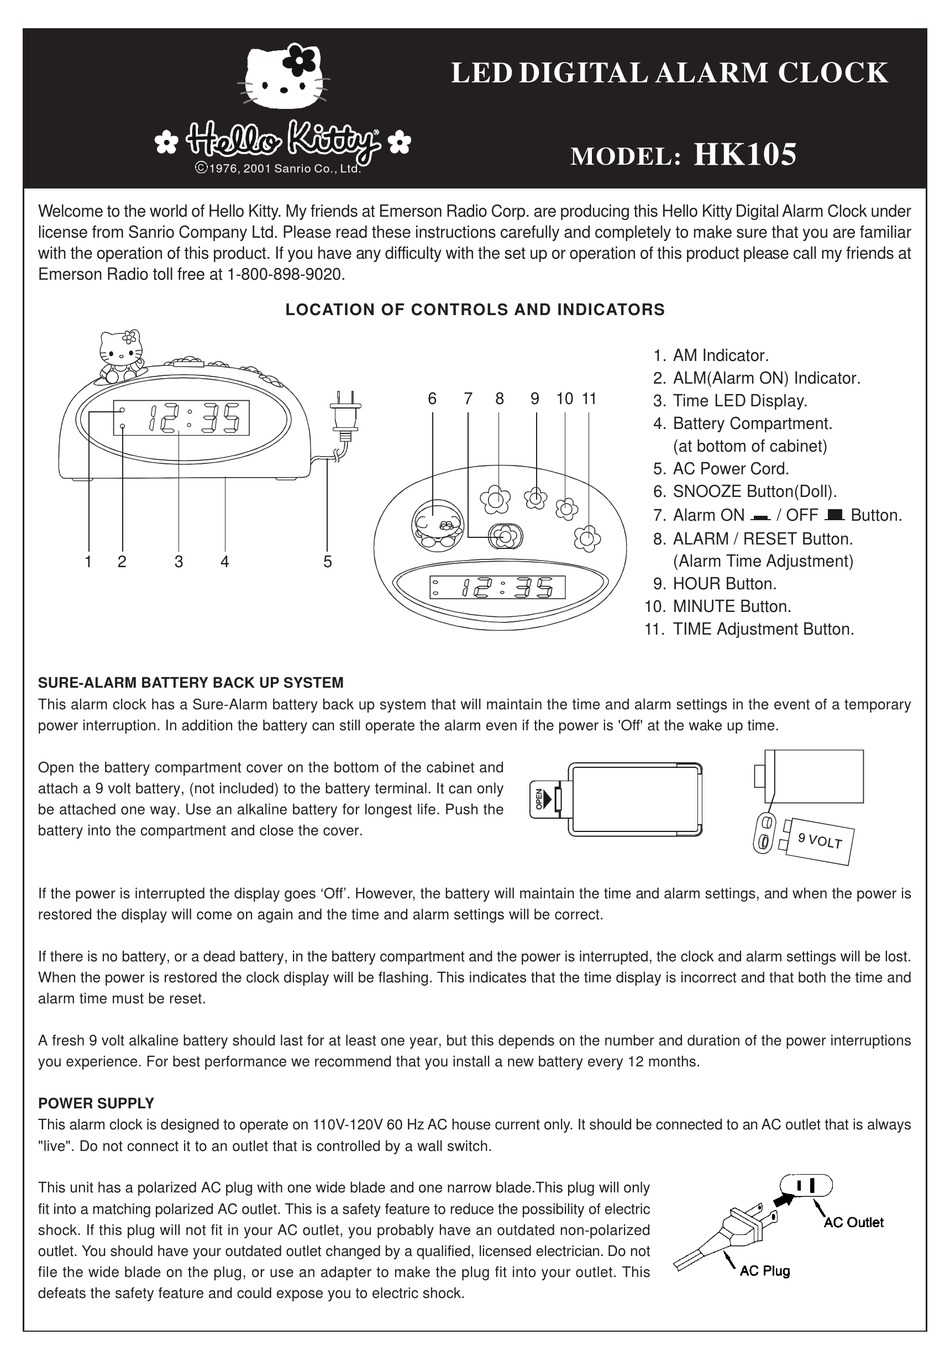 Emerson Alarm Clock Manual